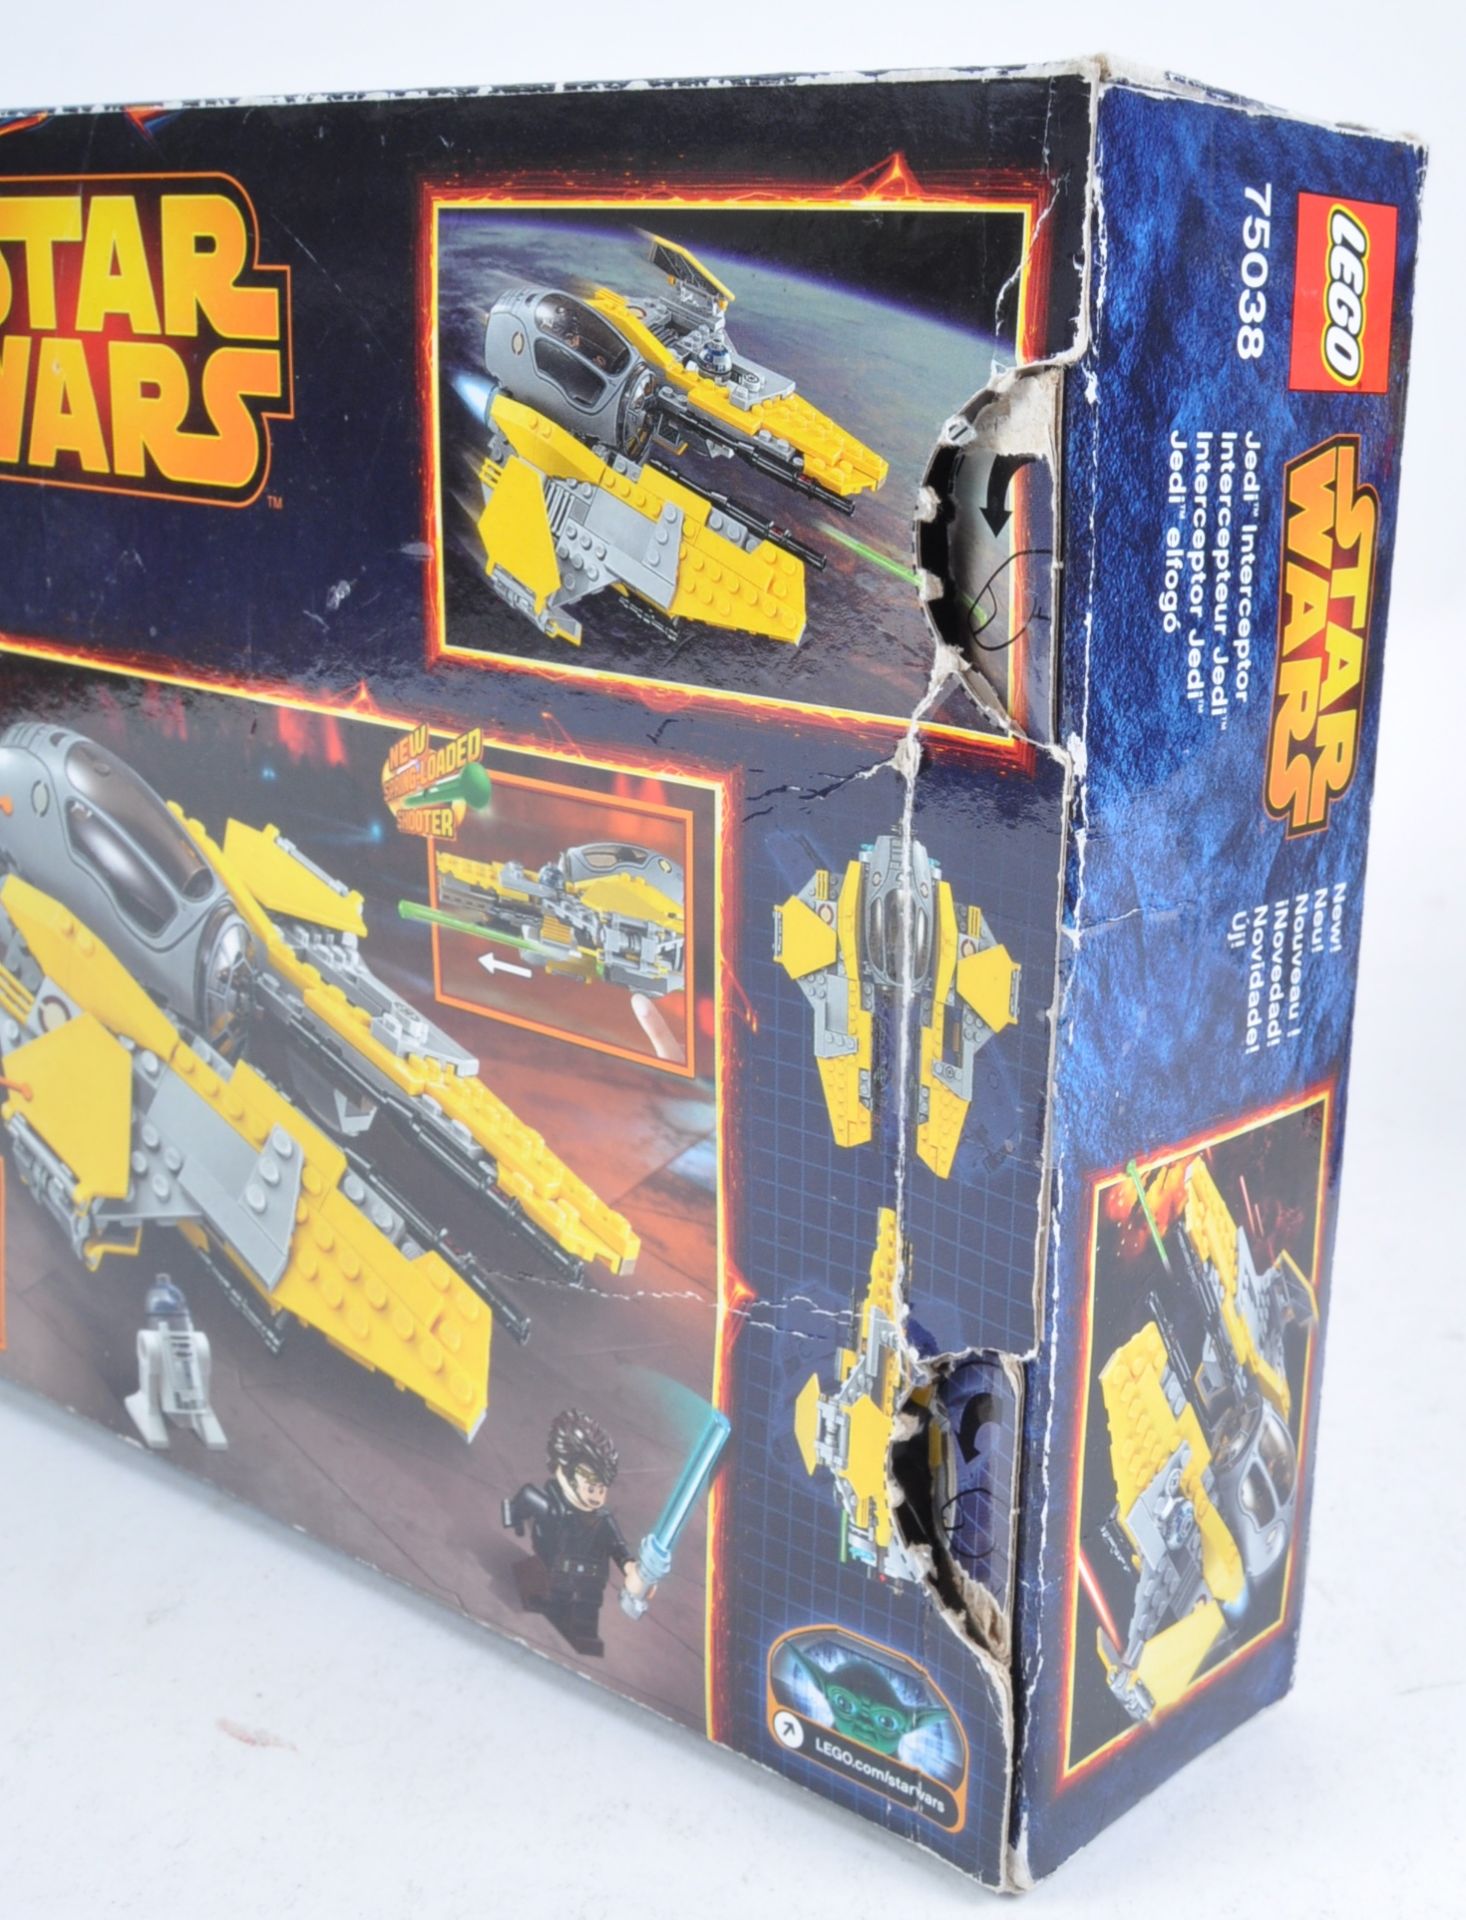 LEGO SETS - LEGO STAR WARS - 75038 / 75039 / 75040 - Image 3 of 5